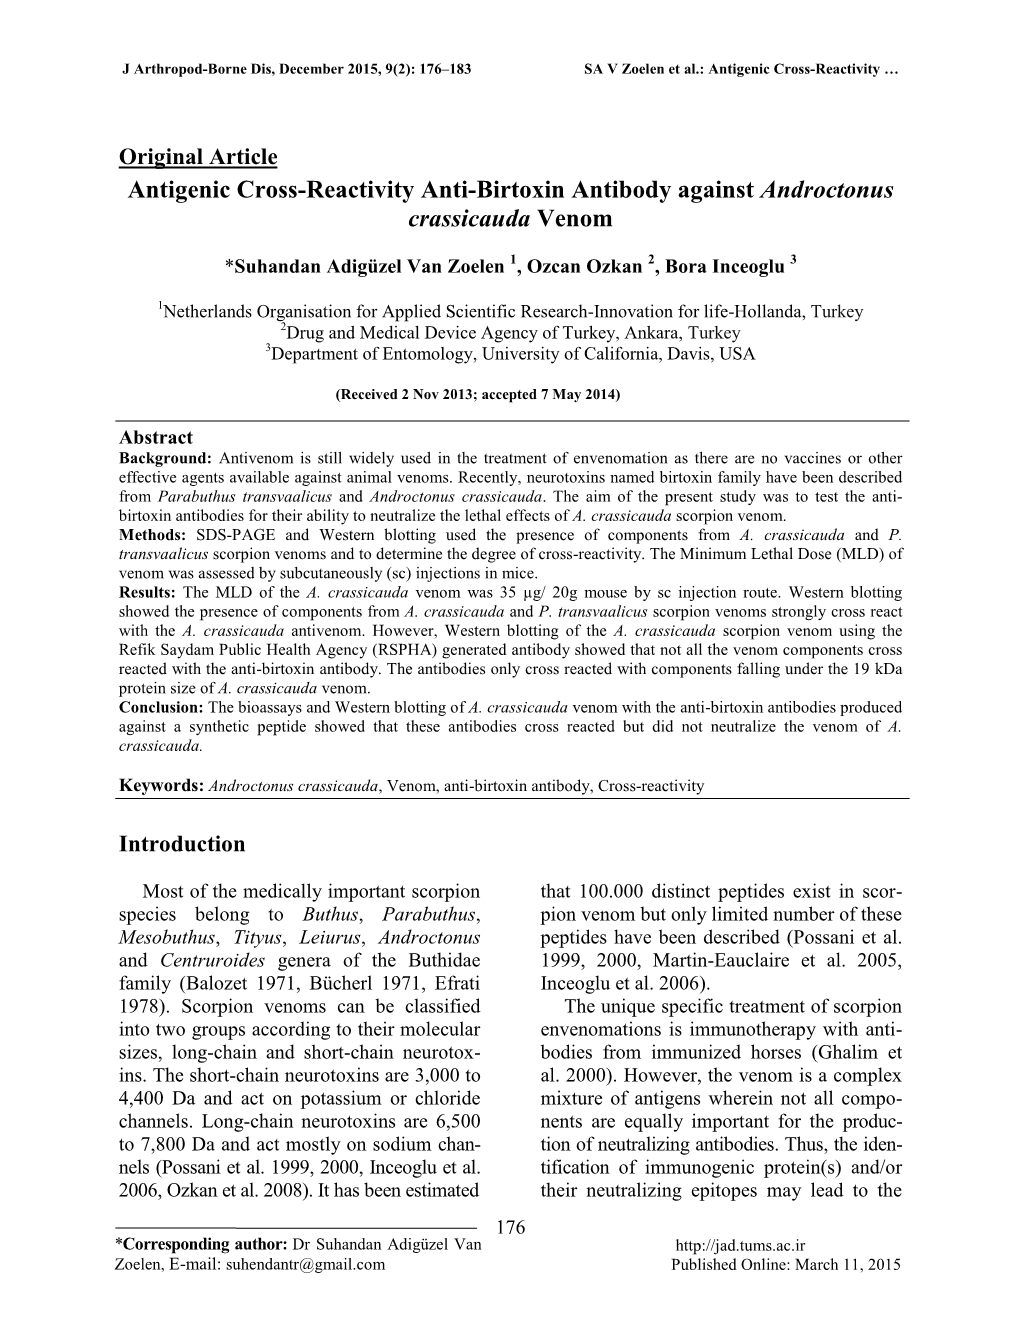 Antigenic Cross-Reactivity Anti-Birtoxin Antibody Against Androctonus Crassicauda Venom